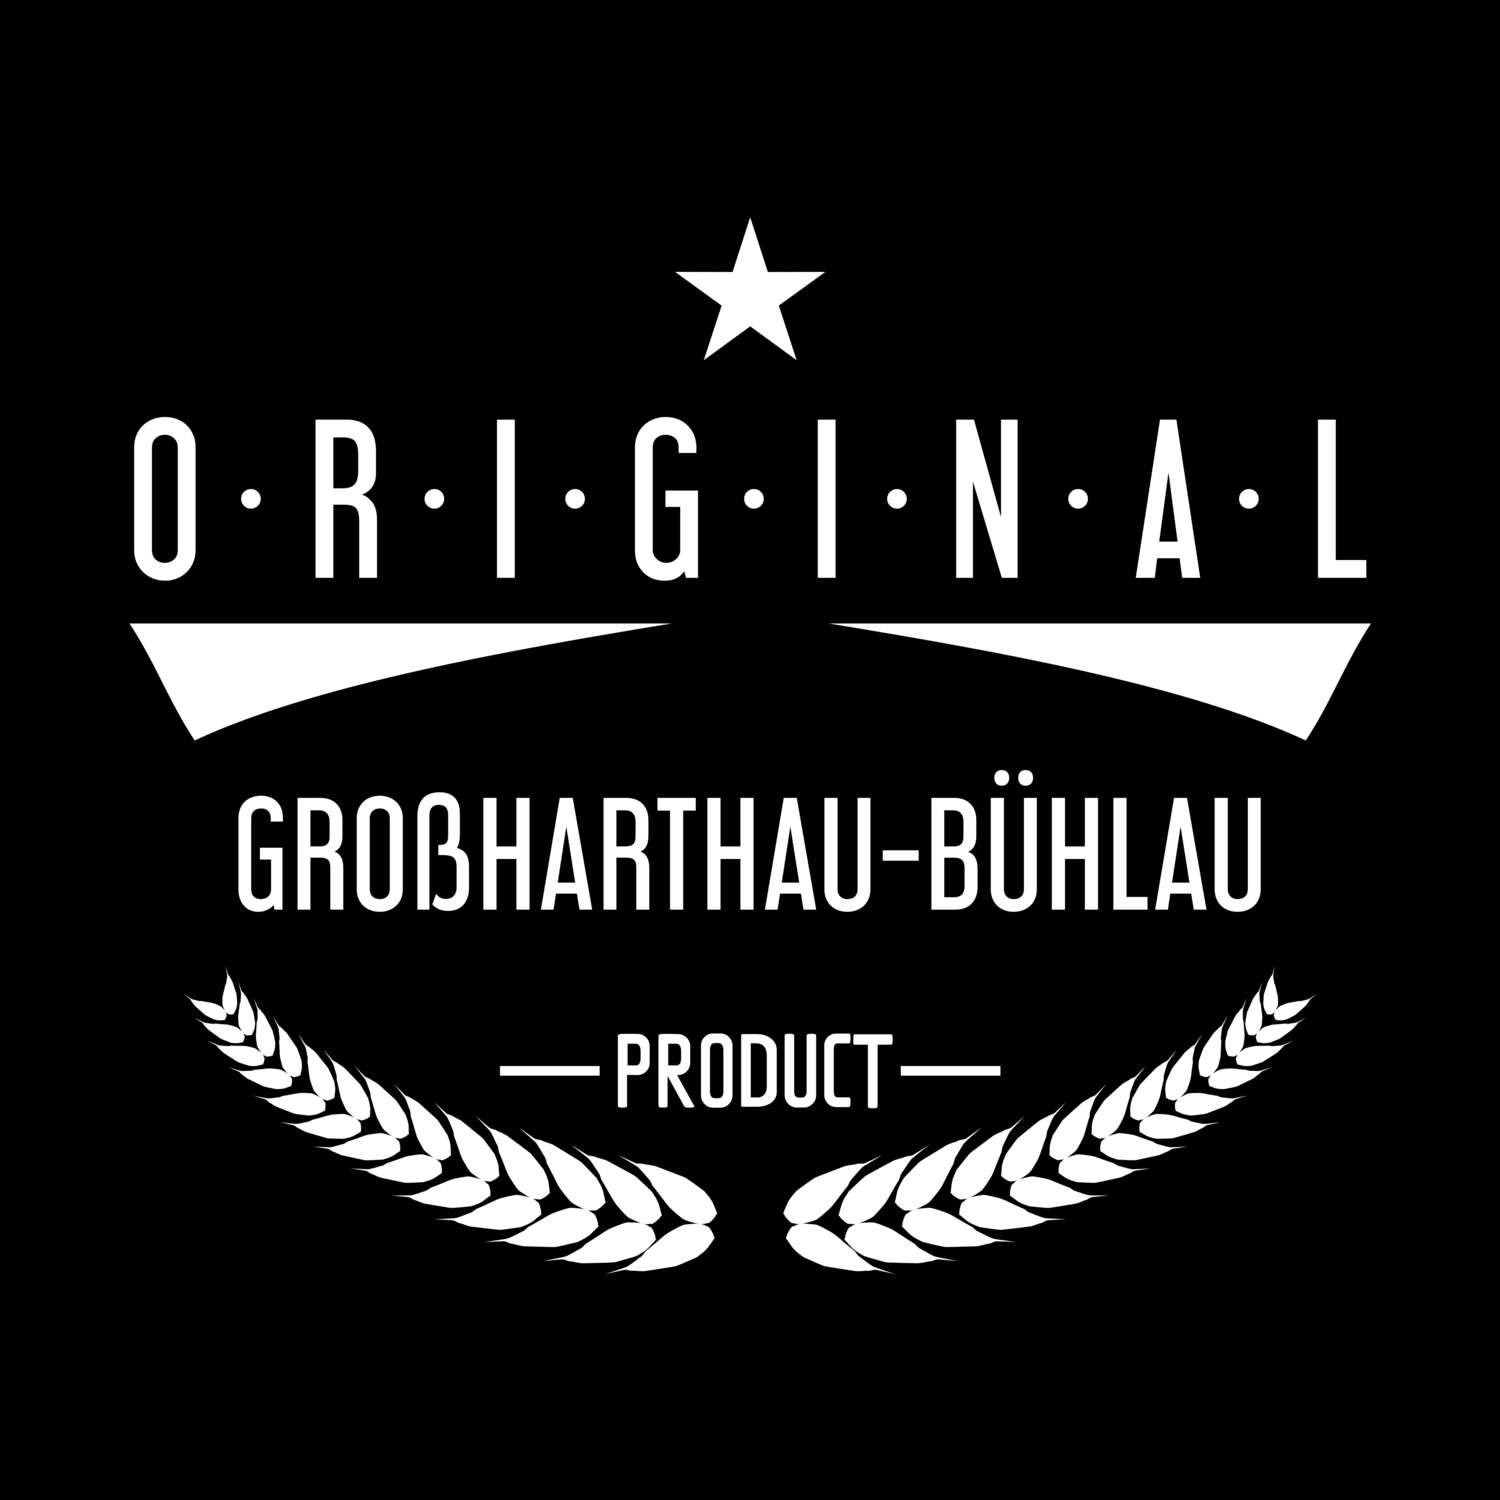 Großharthau-Bühlau T-Shirt »Original Product«